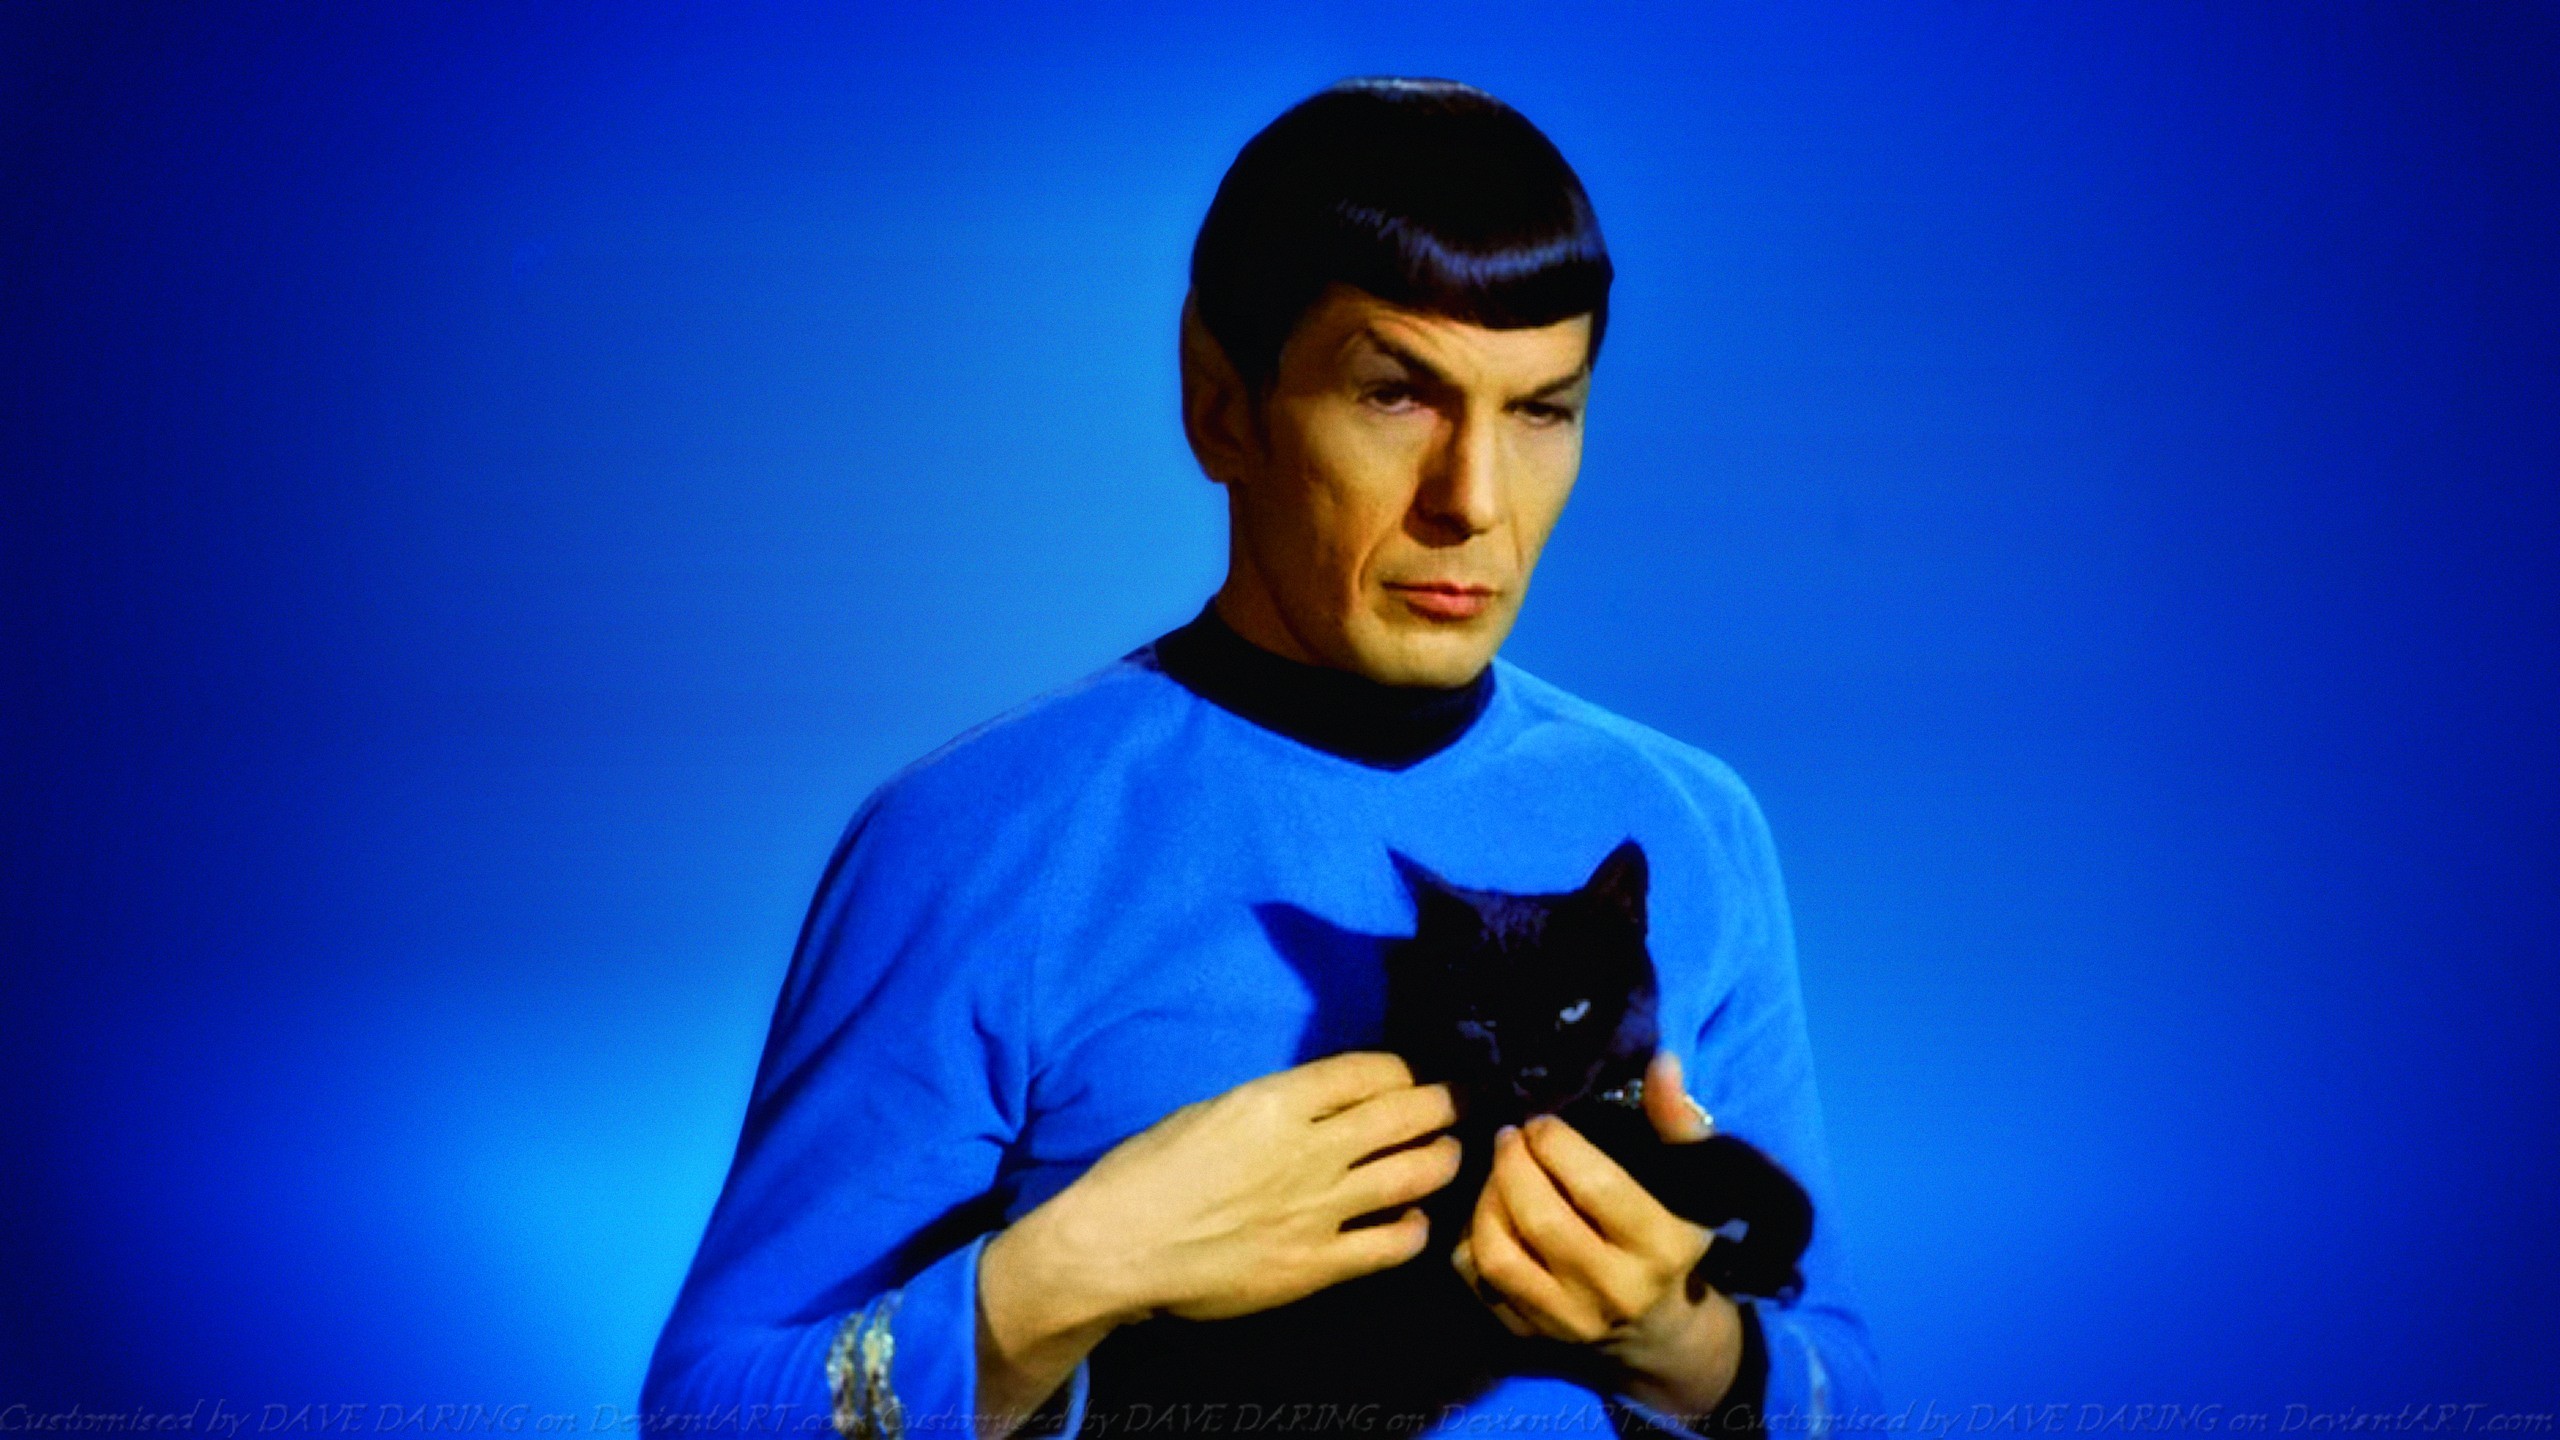 2560x1440 ... Leonard Nimoy Spock by Dave-Daring